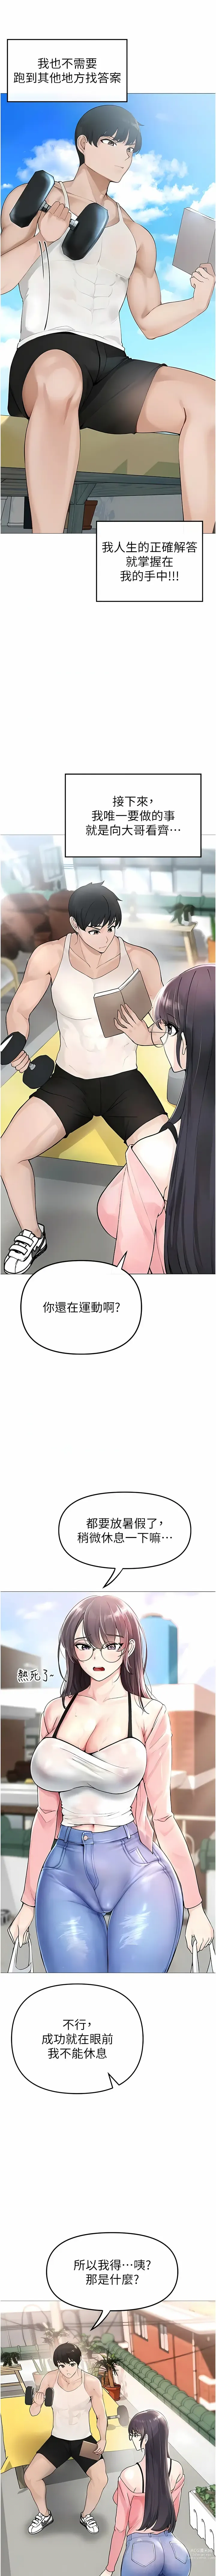 Page 22 of manga ↖㊣煞氣a猛男㊣↘ 1-37